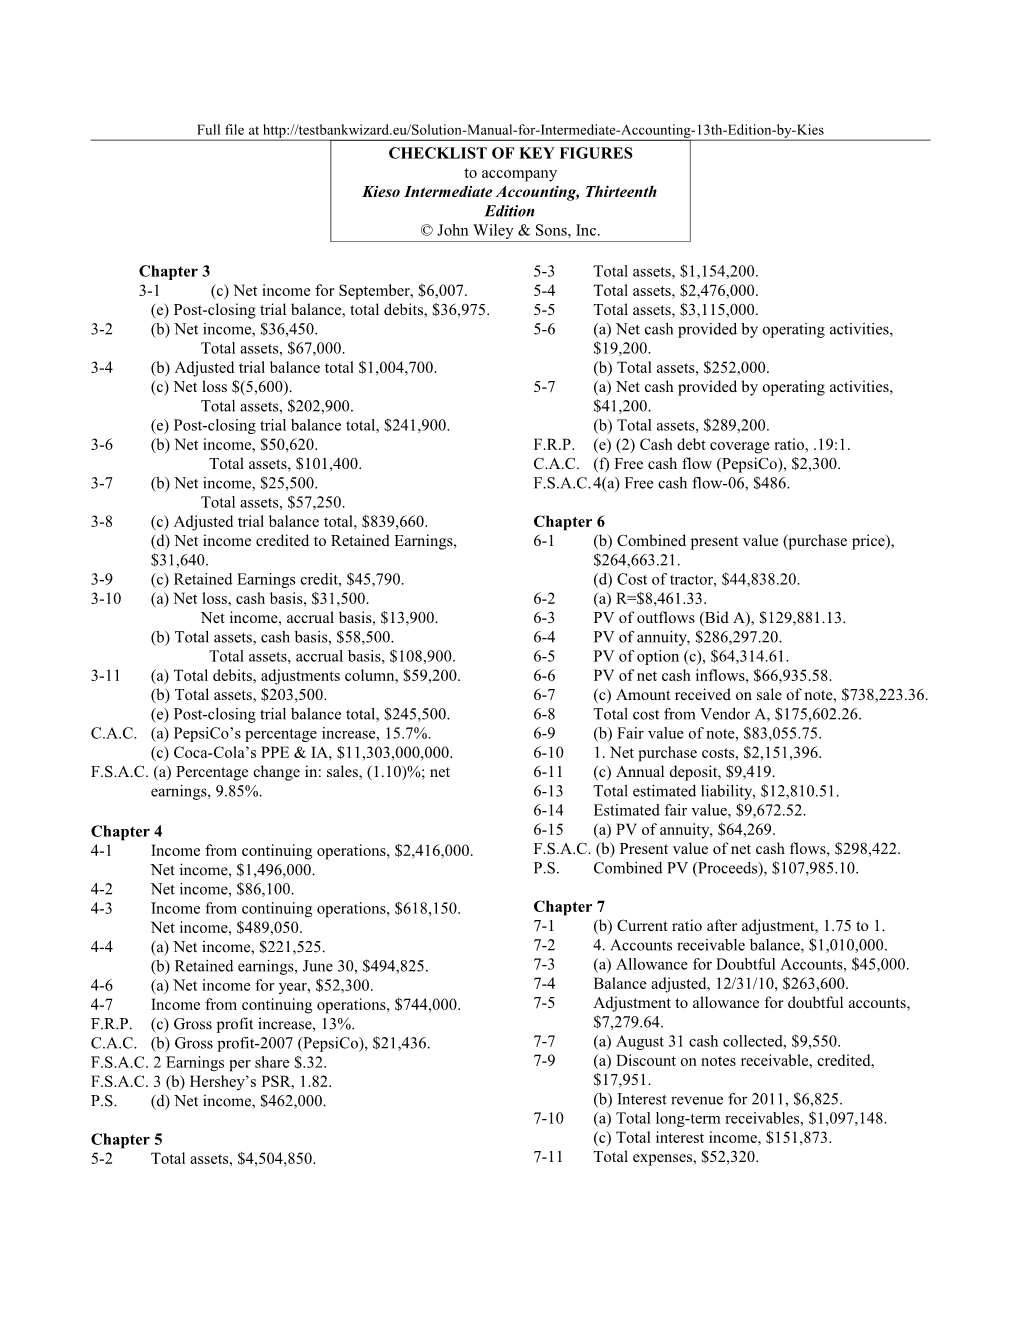 Kieso Intermediate Accounting, Thirteenth Edition